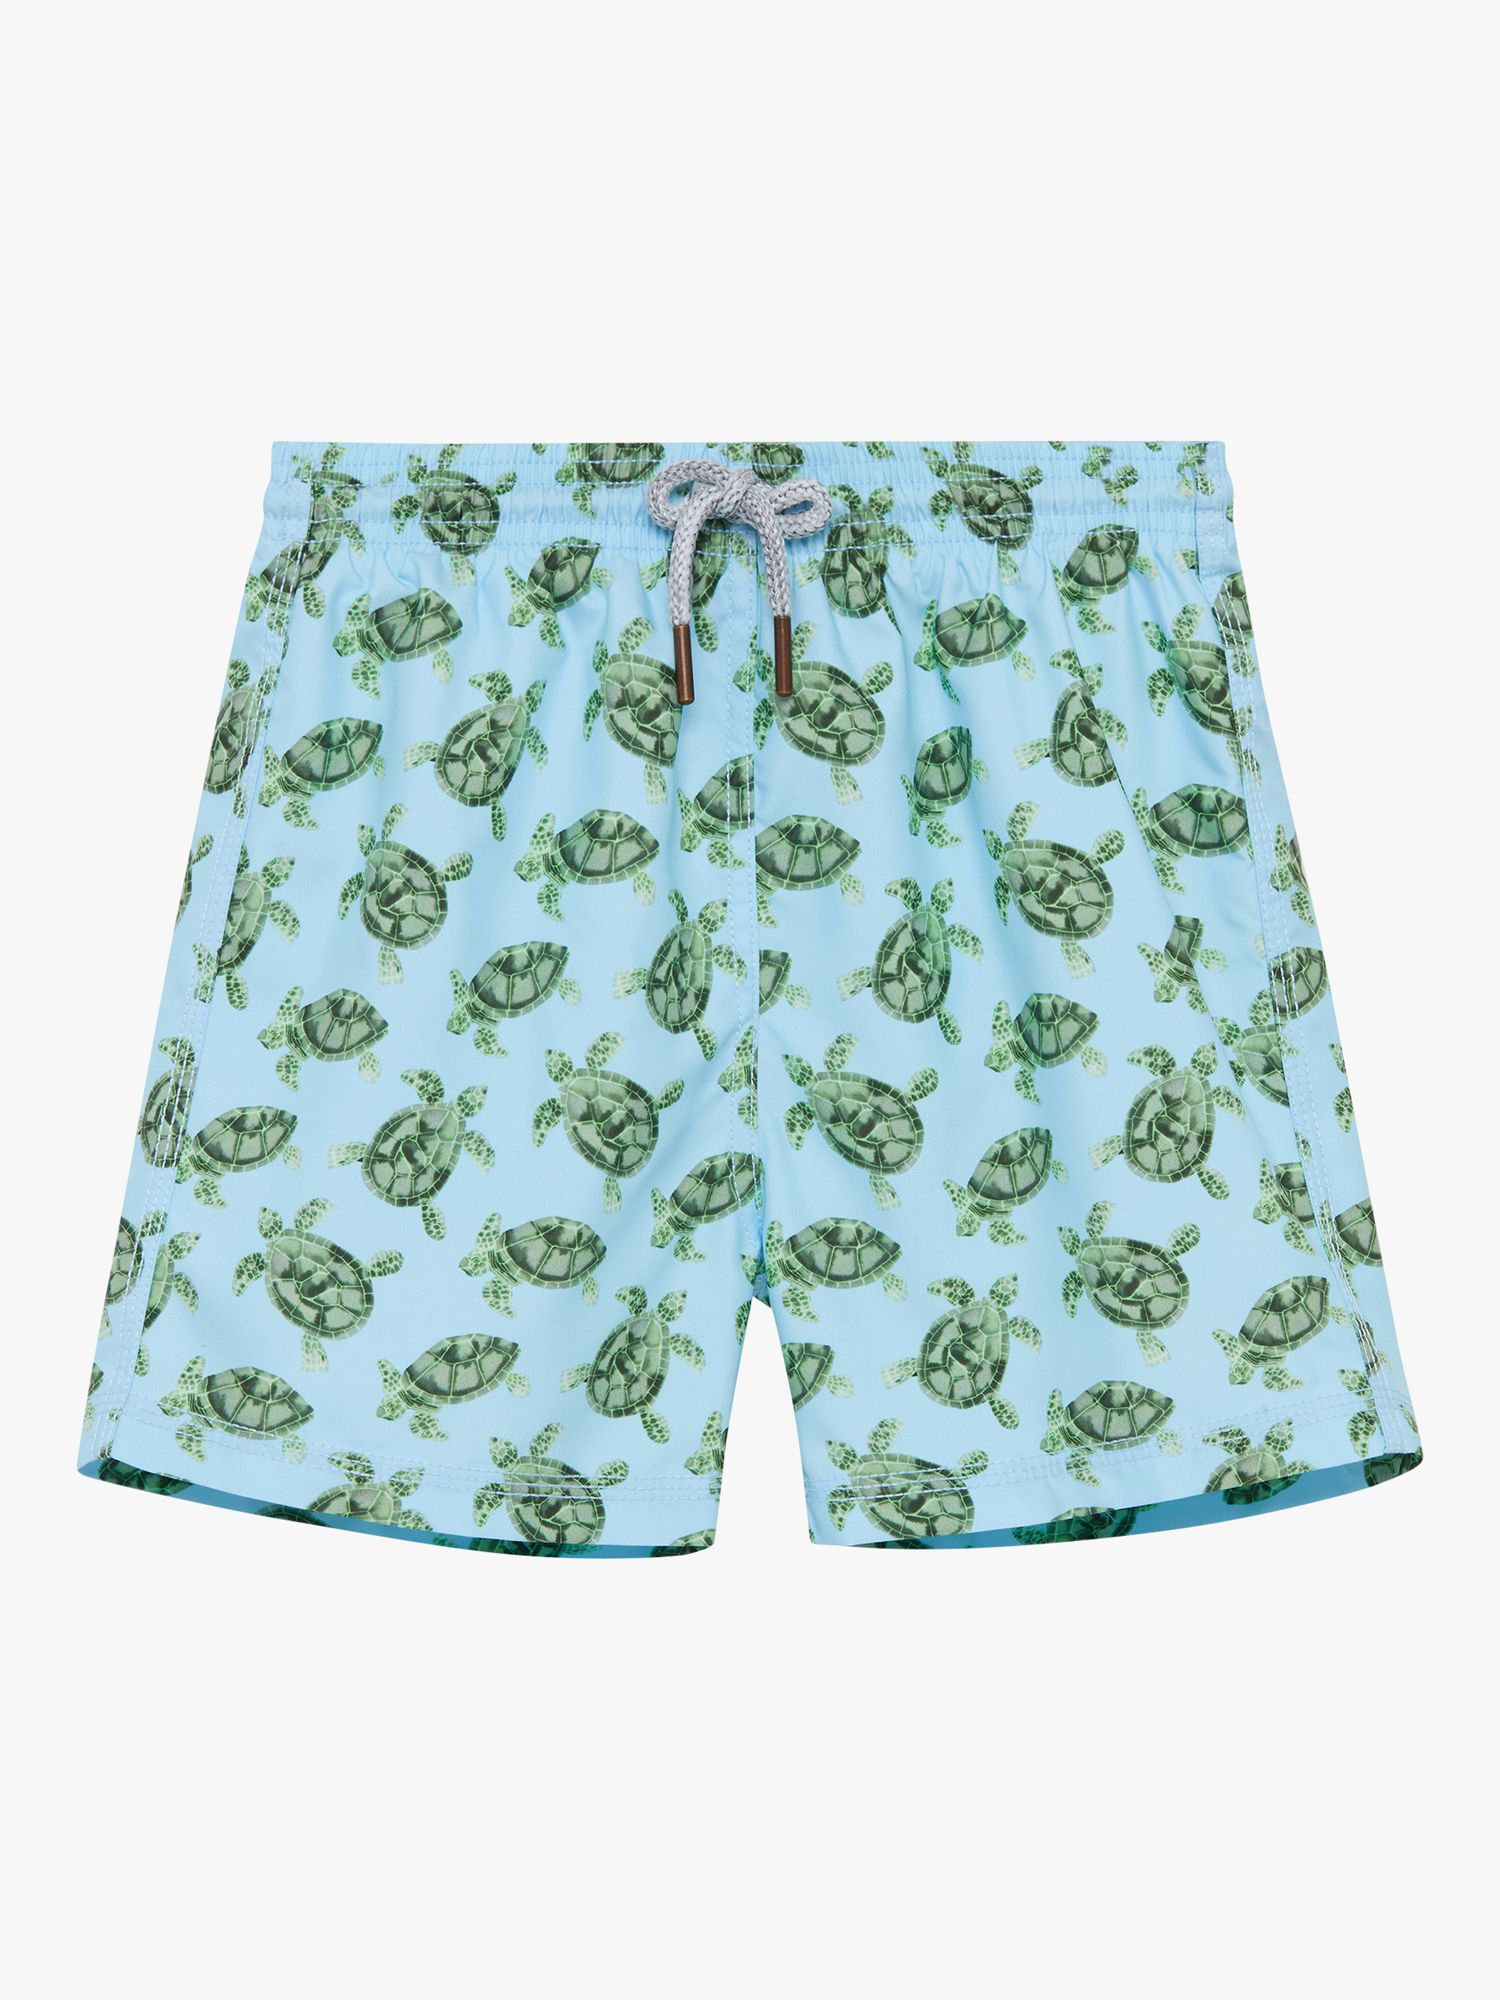 Trotters Kids' Turtle Swim Shorts, Blue, 2-3 years